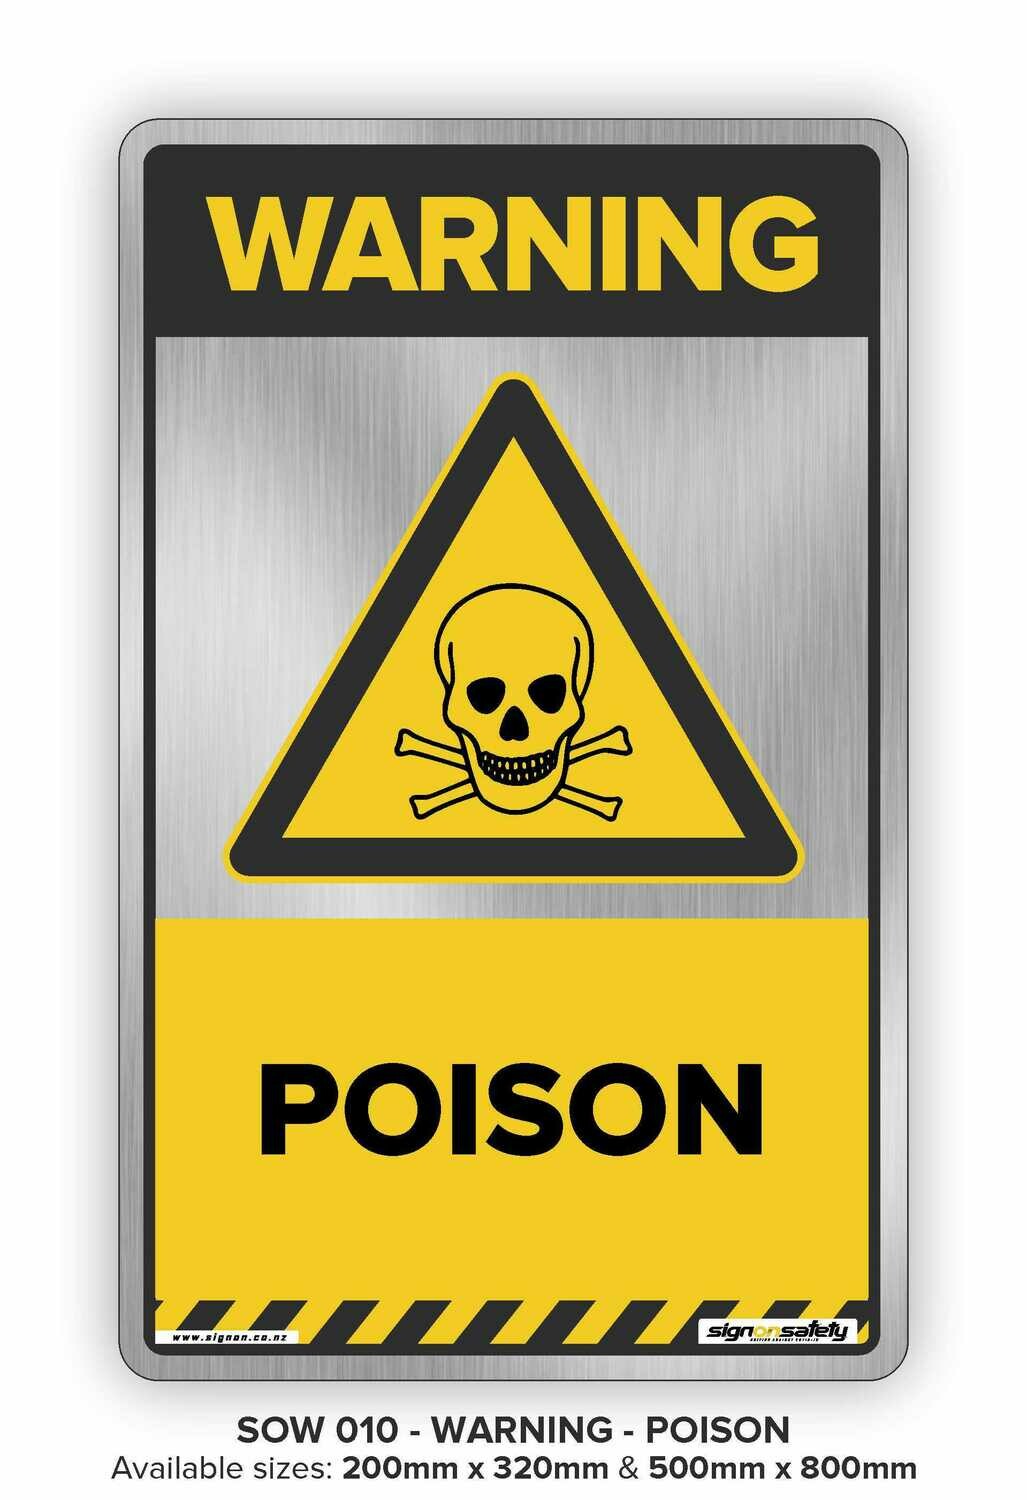 Warning - Poison